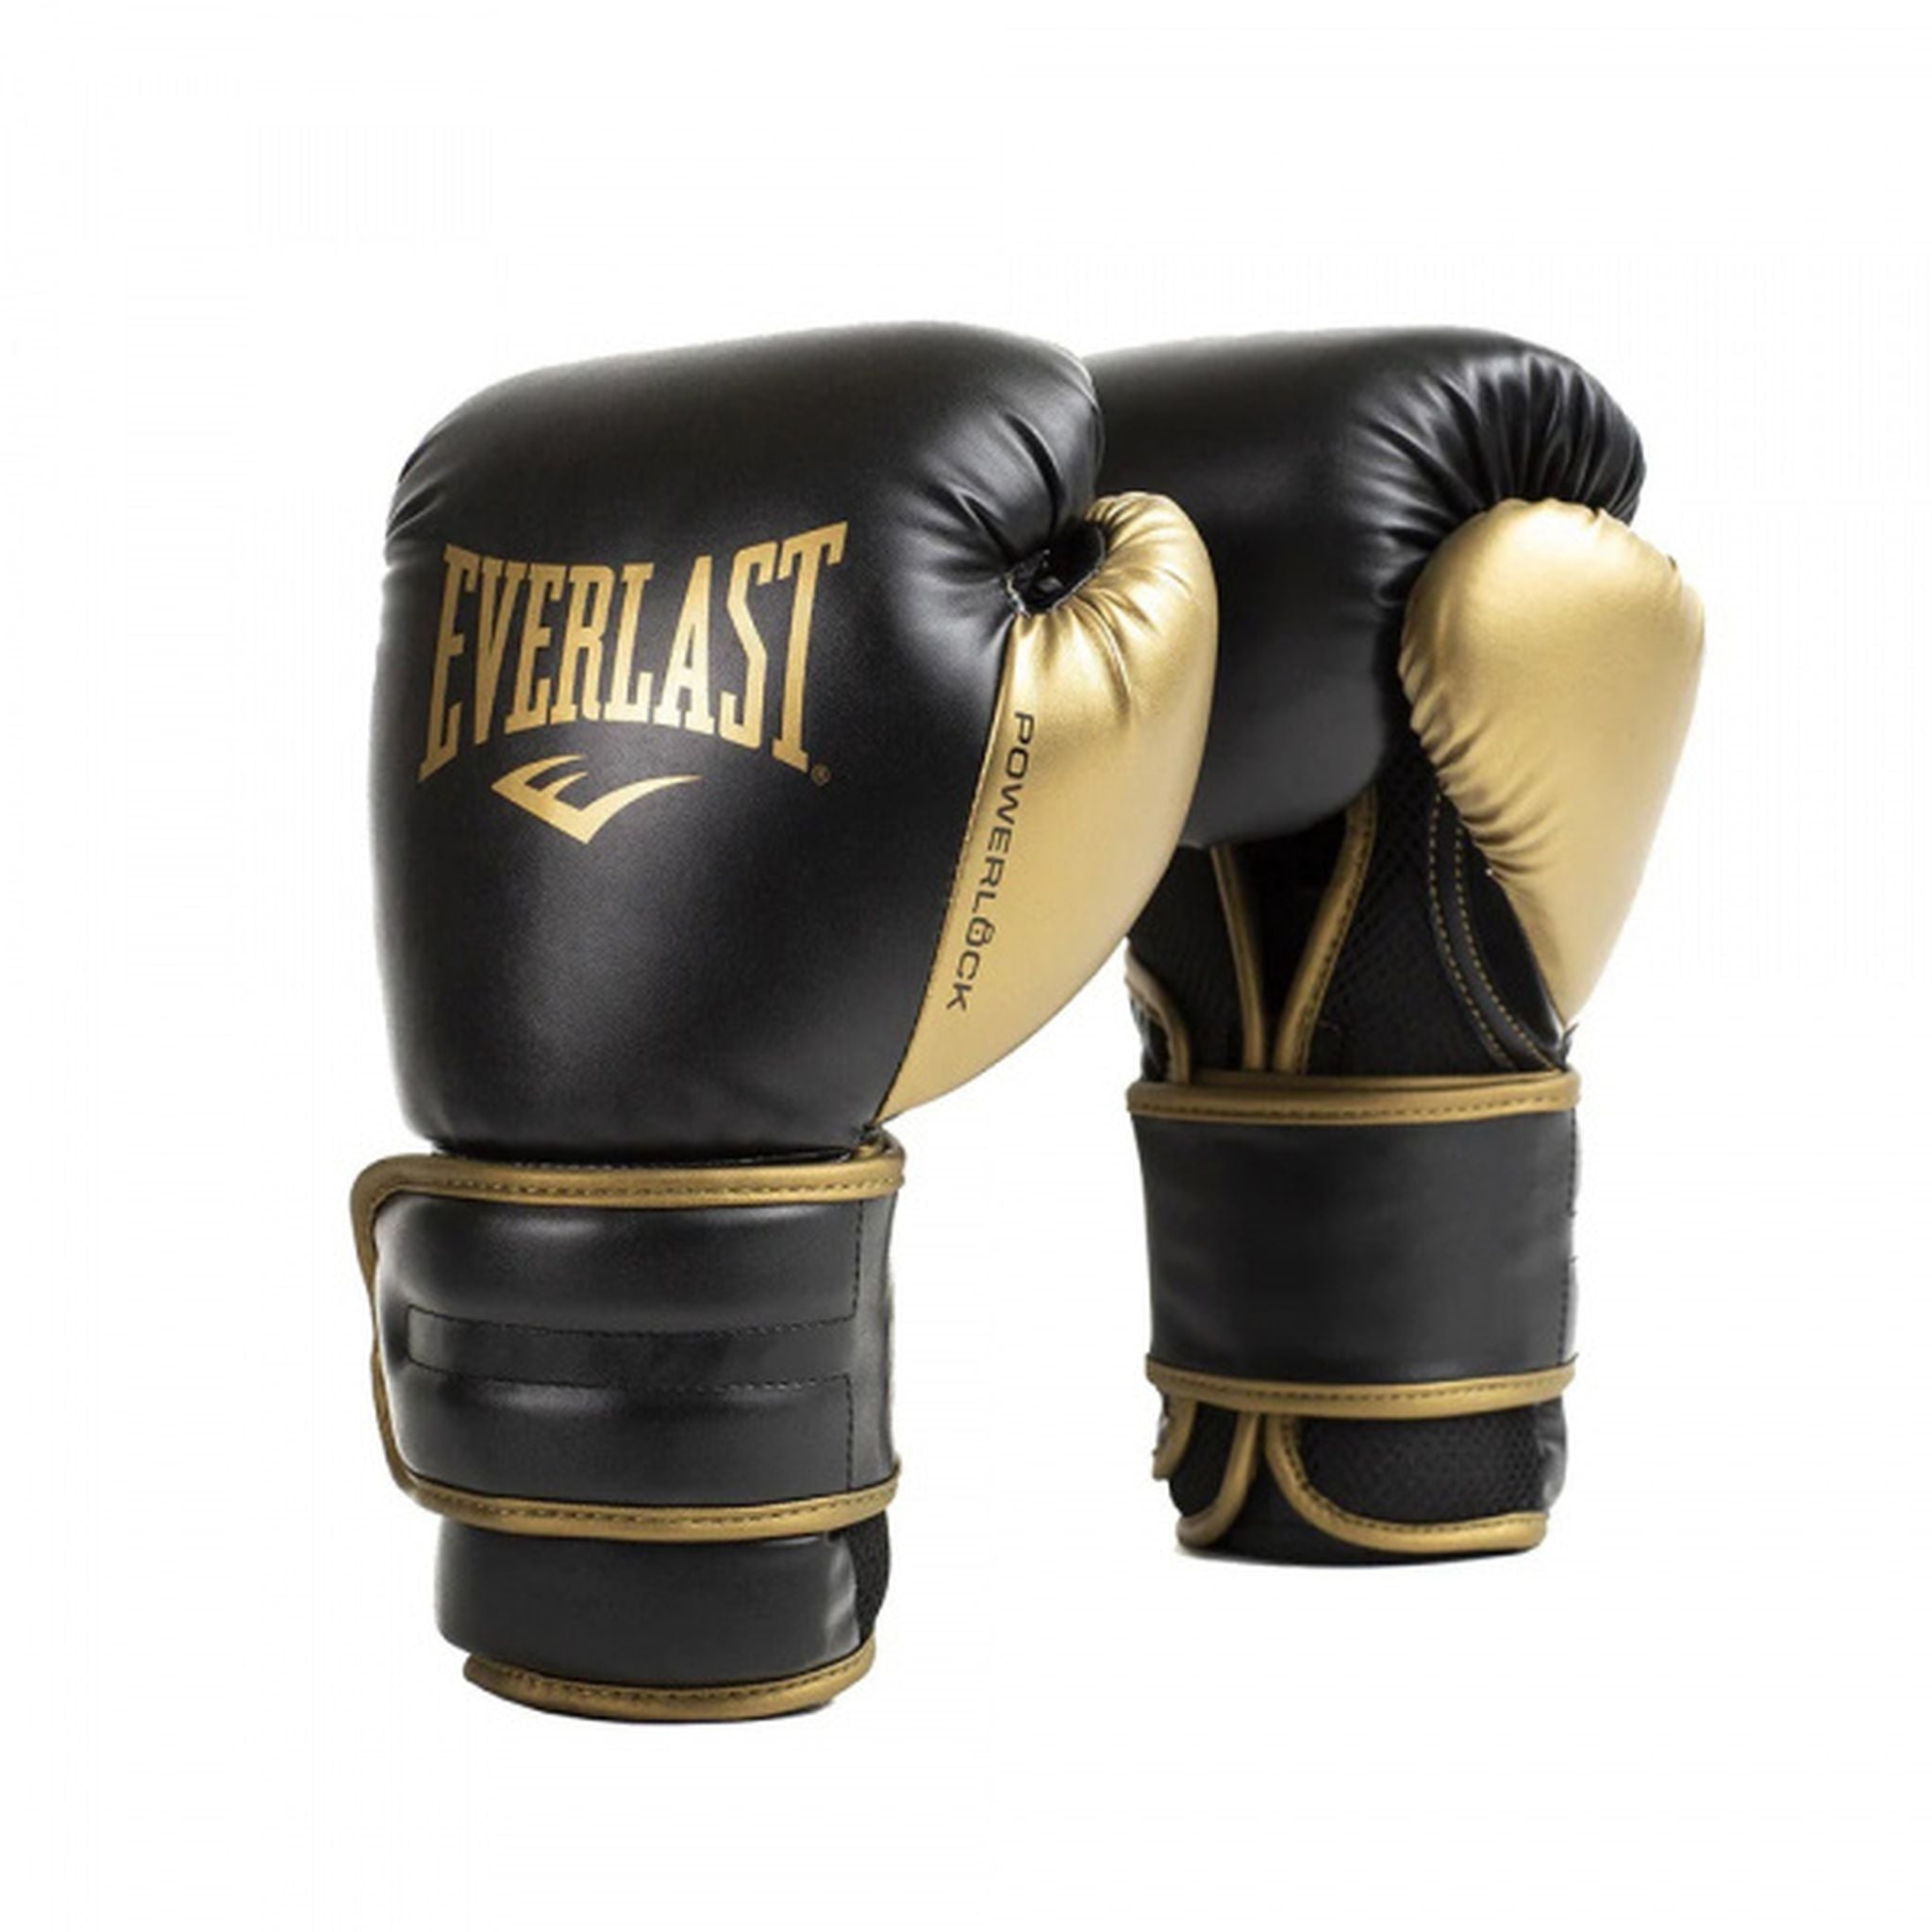 Everlast Powerlock 2 12OZ Boxing Training Glove